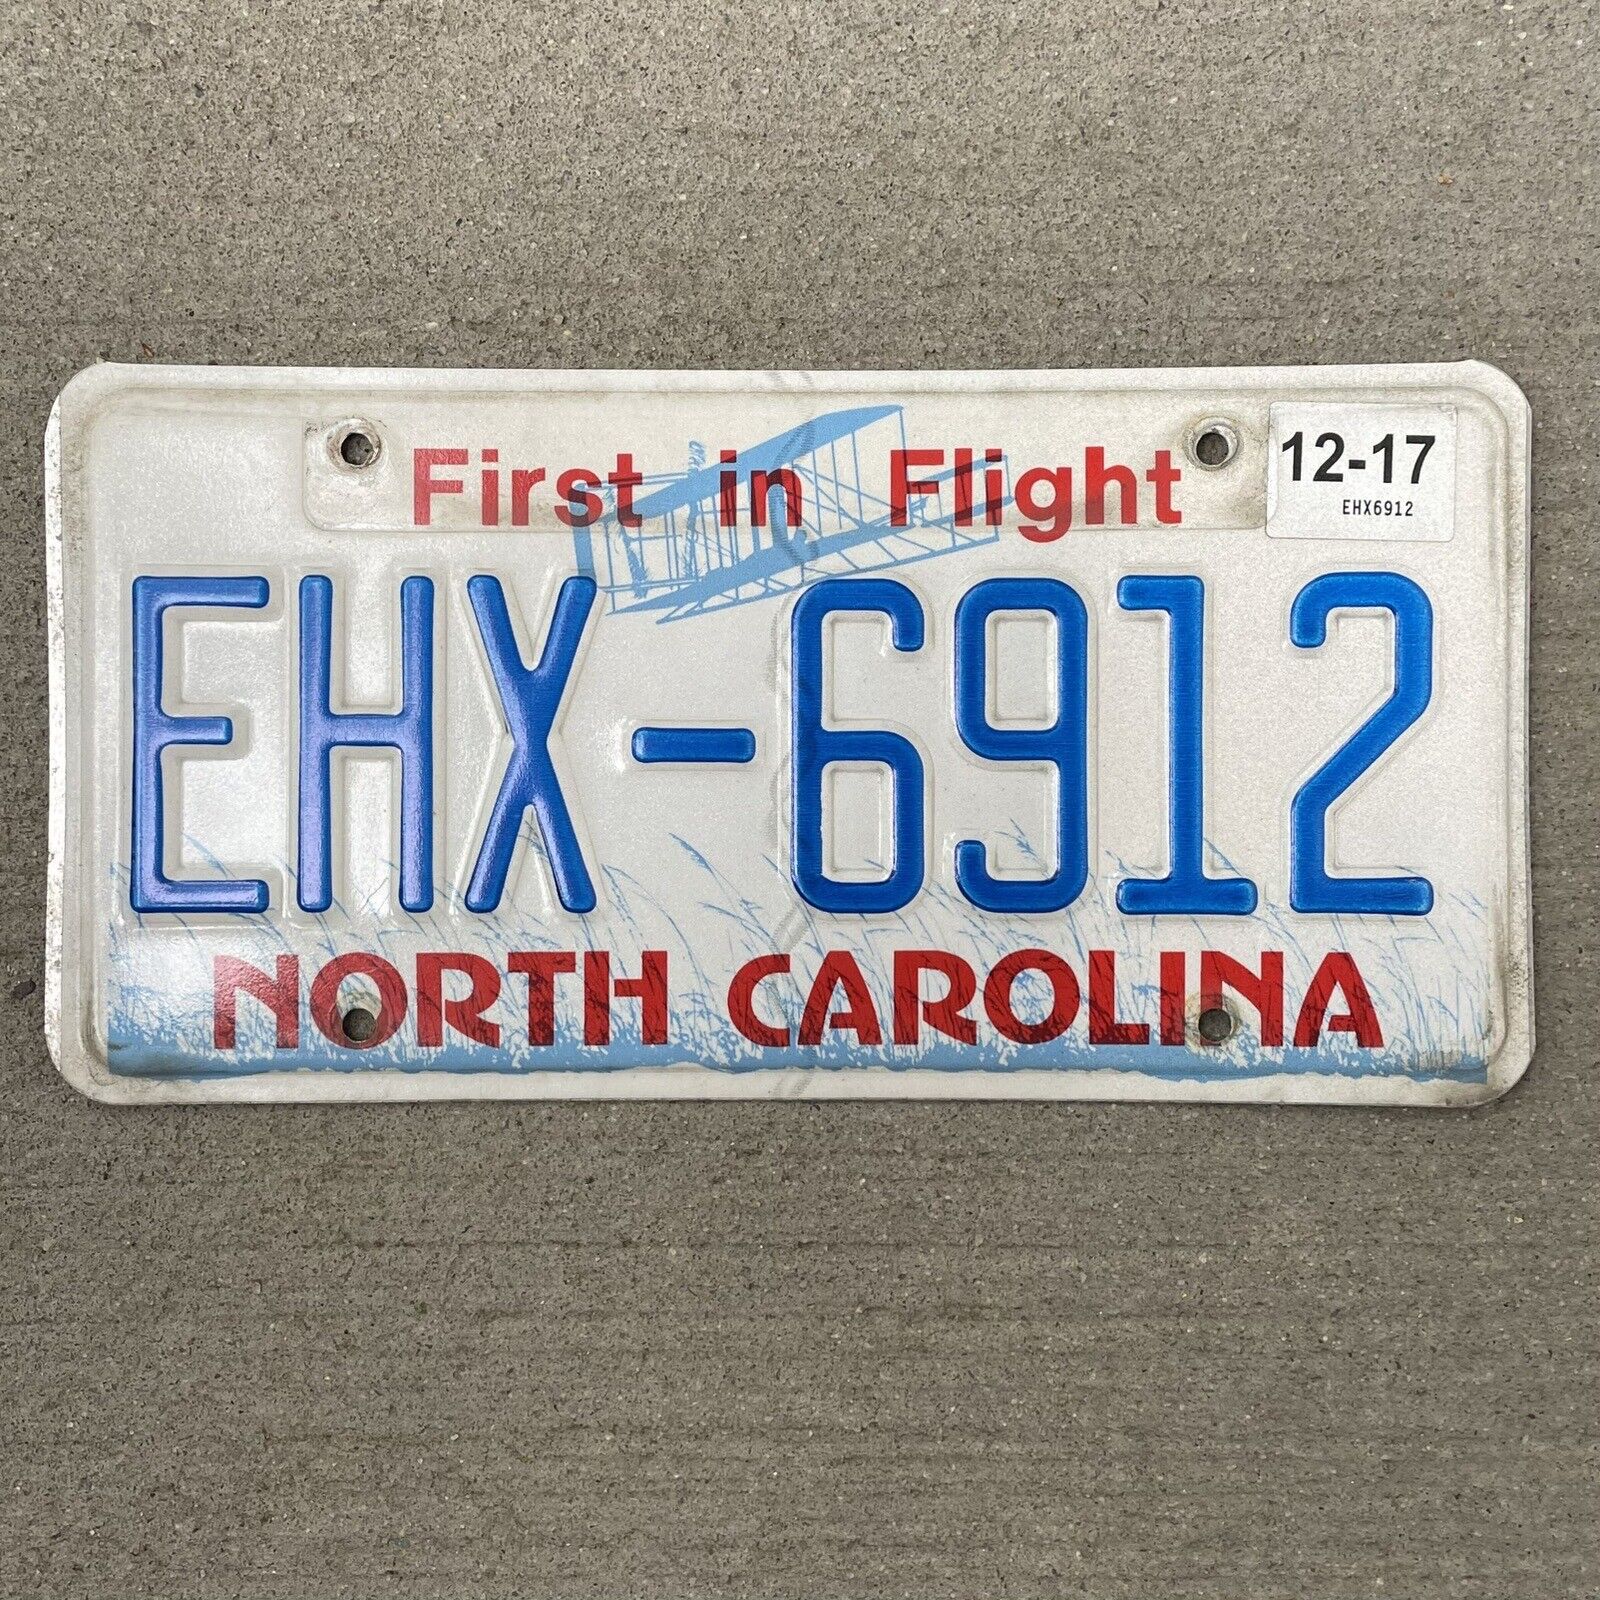 North Carolina LICENSE PLATE - EHX 6912